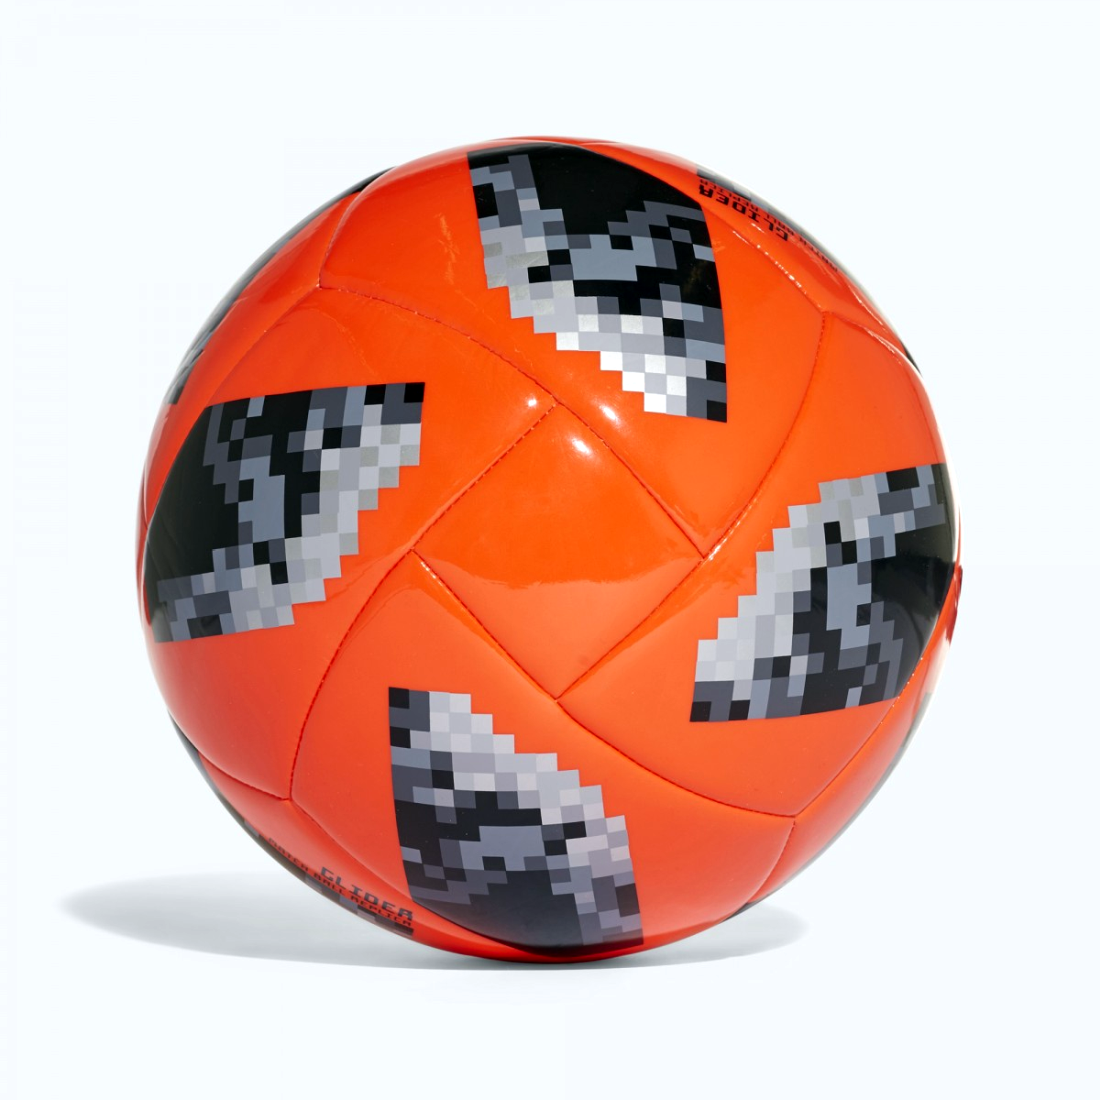 Minge fotbal Adidas World Cup, portoclaiu-negru